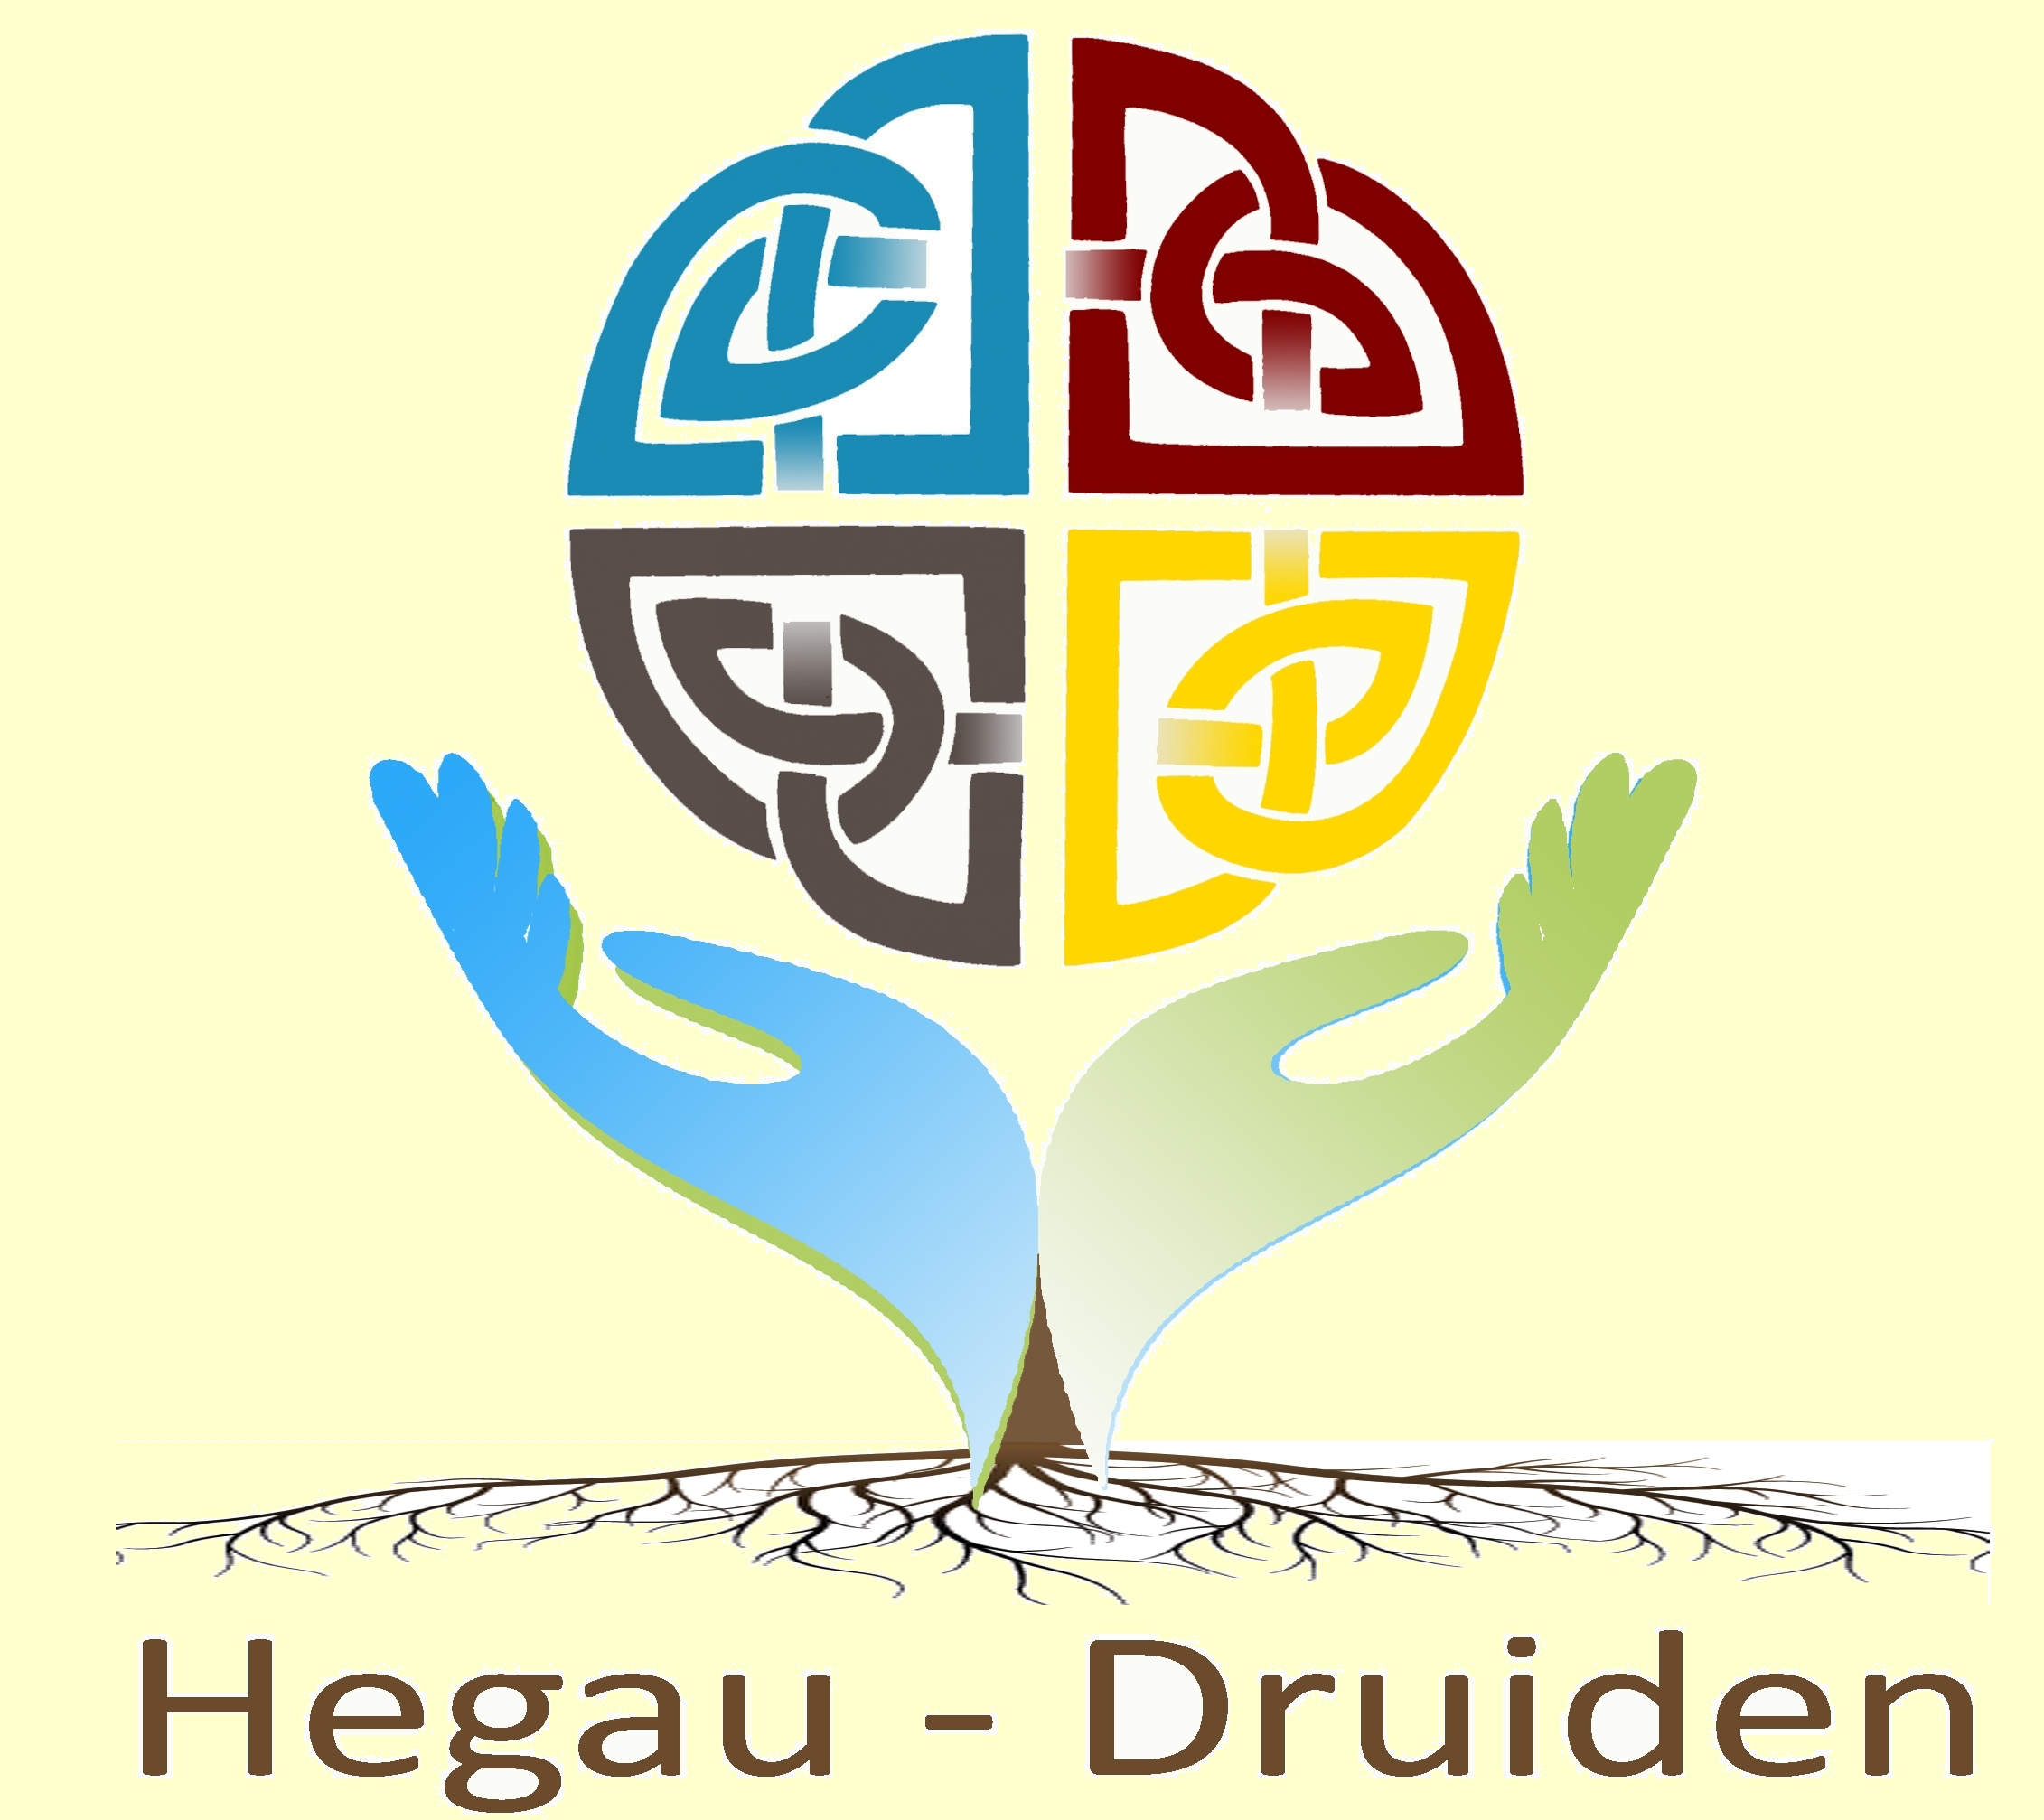 Hegau-Druiden